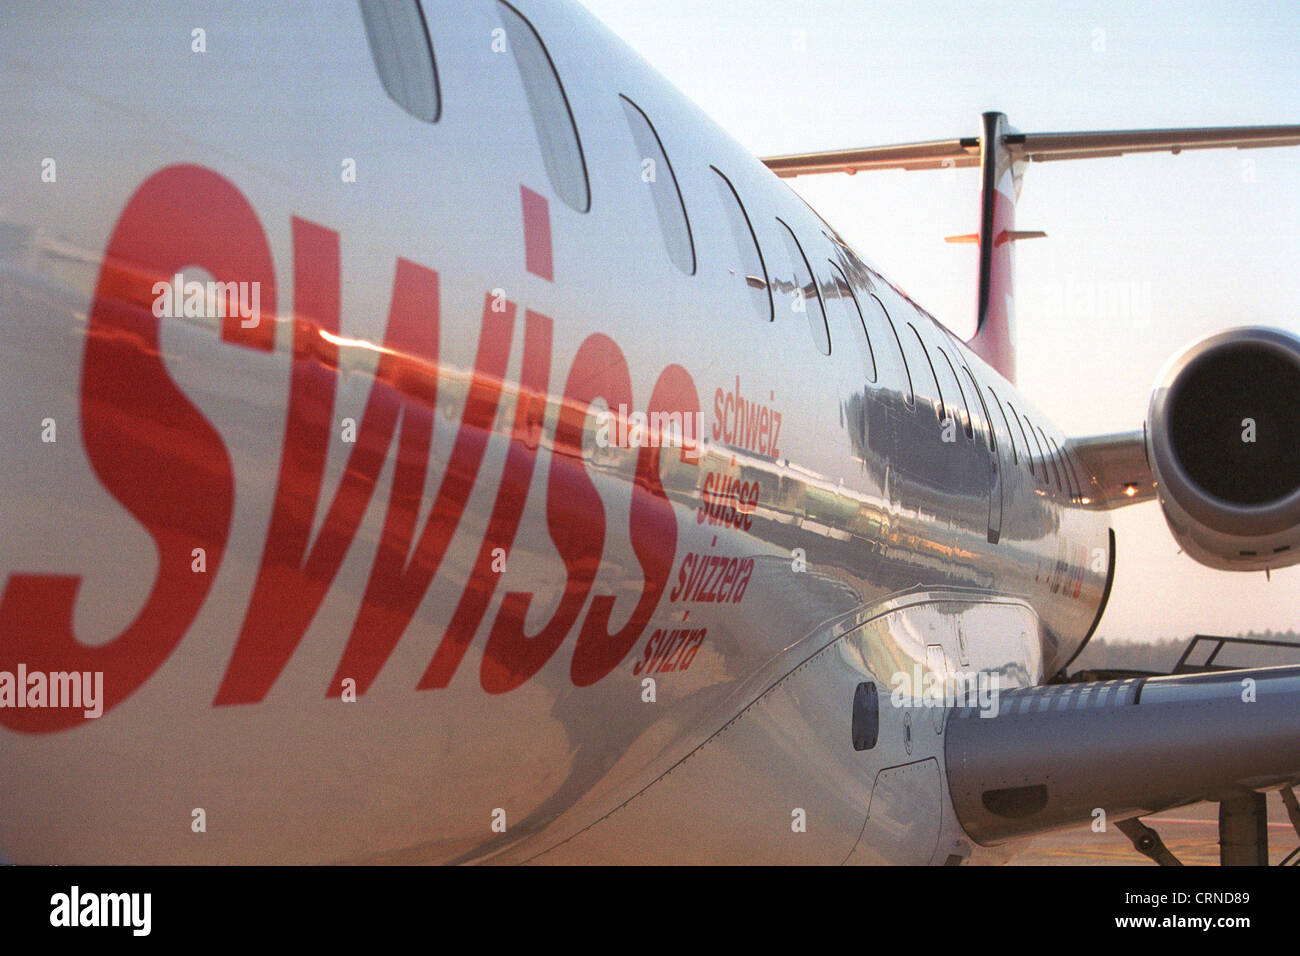 Airline logo on a Swiss machine Stock Photo